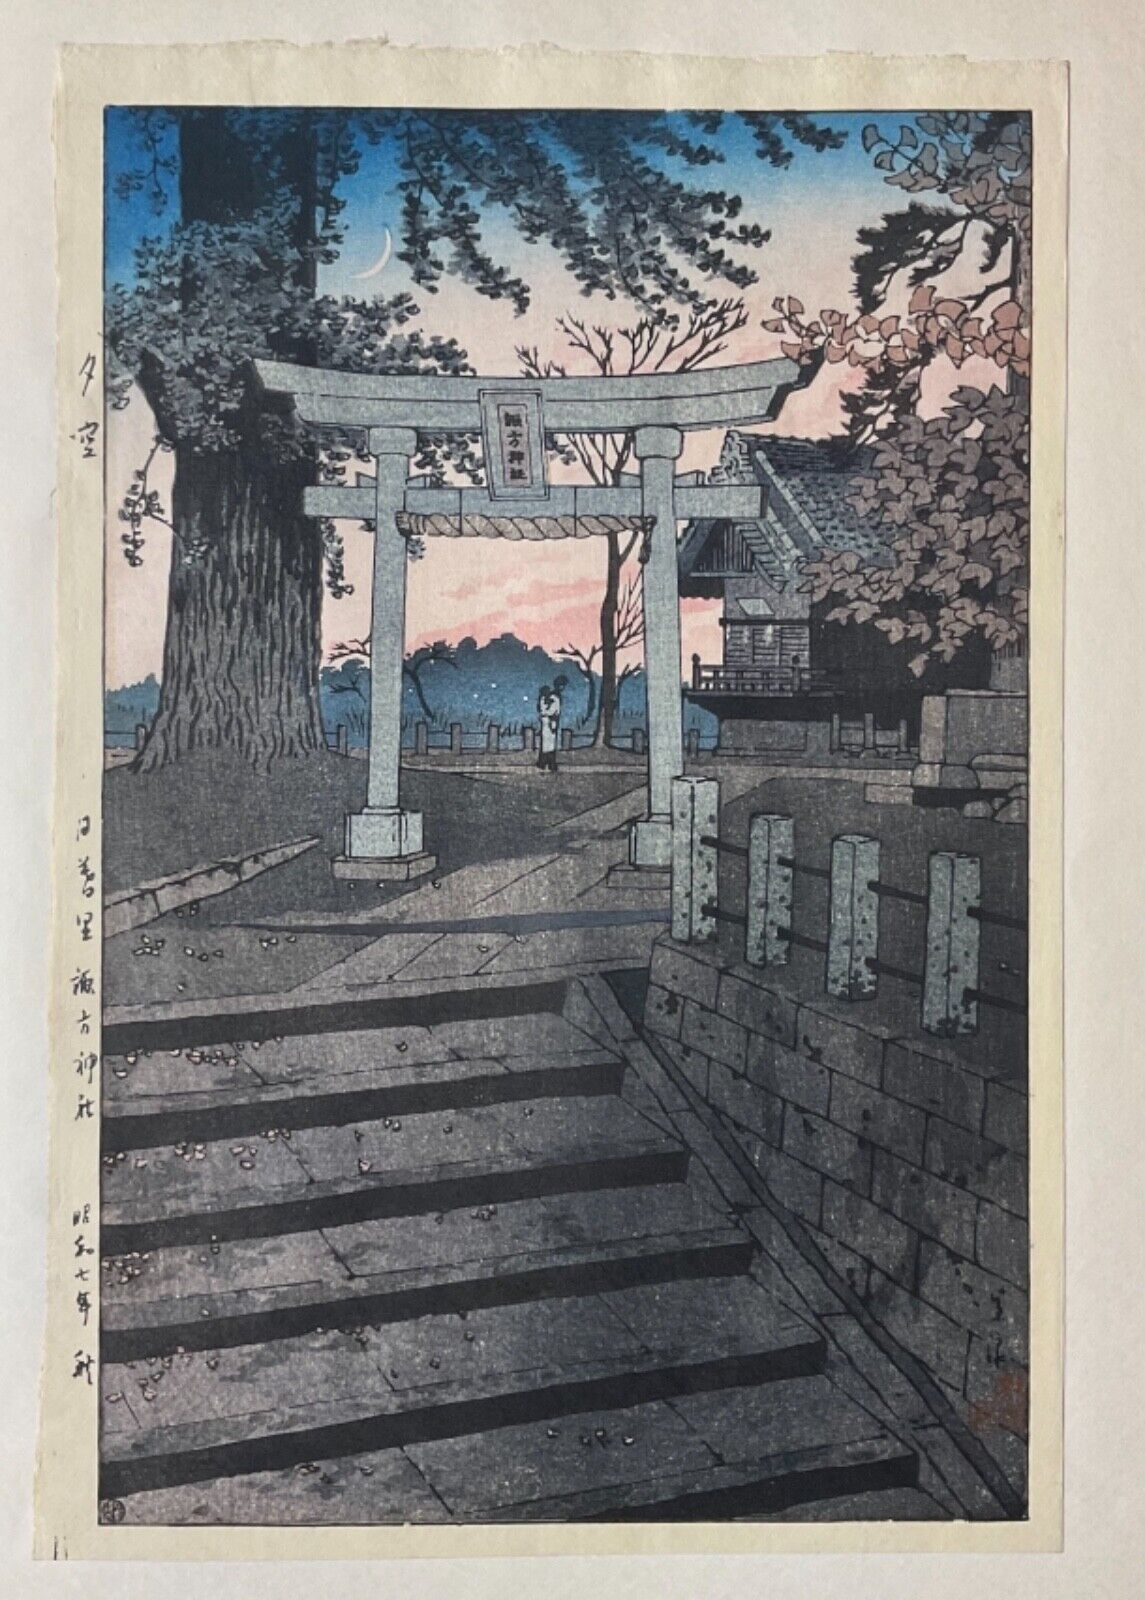 FANTASTIC Original Vintage Japanese Woodblock SHIRO KASAMA Print High order quality assurance